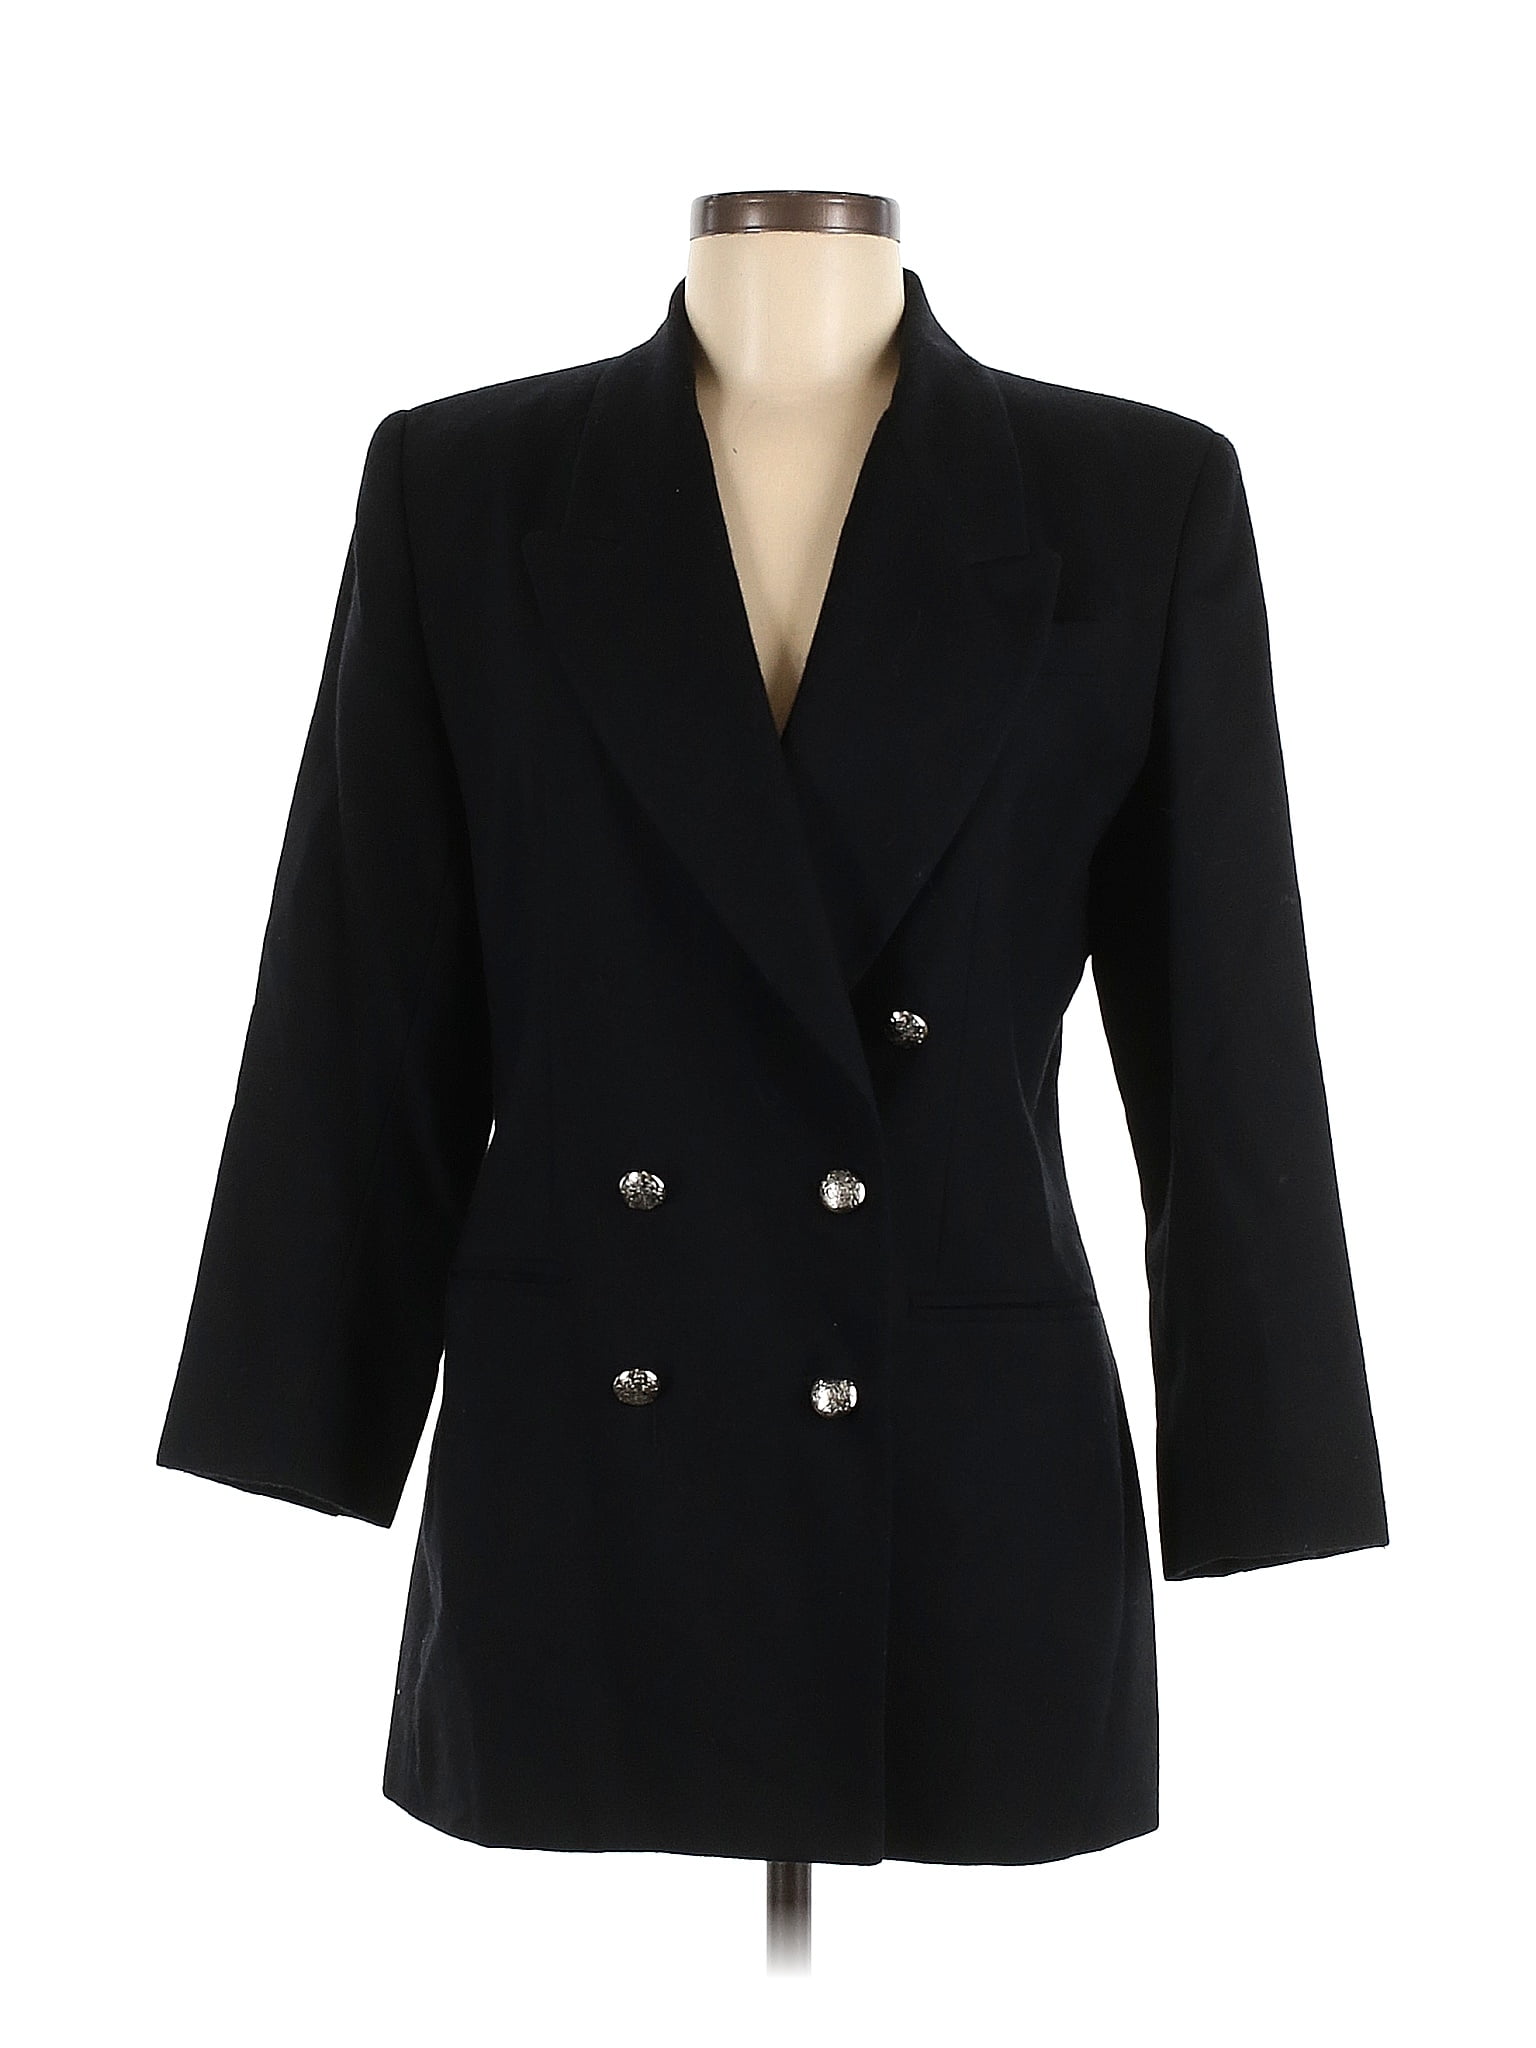 Jackets & Overcoats, New Jacket Danskin Now